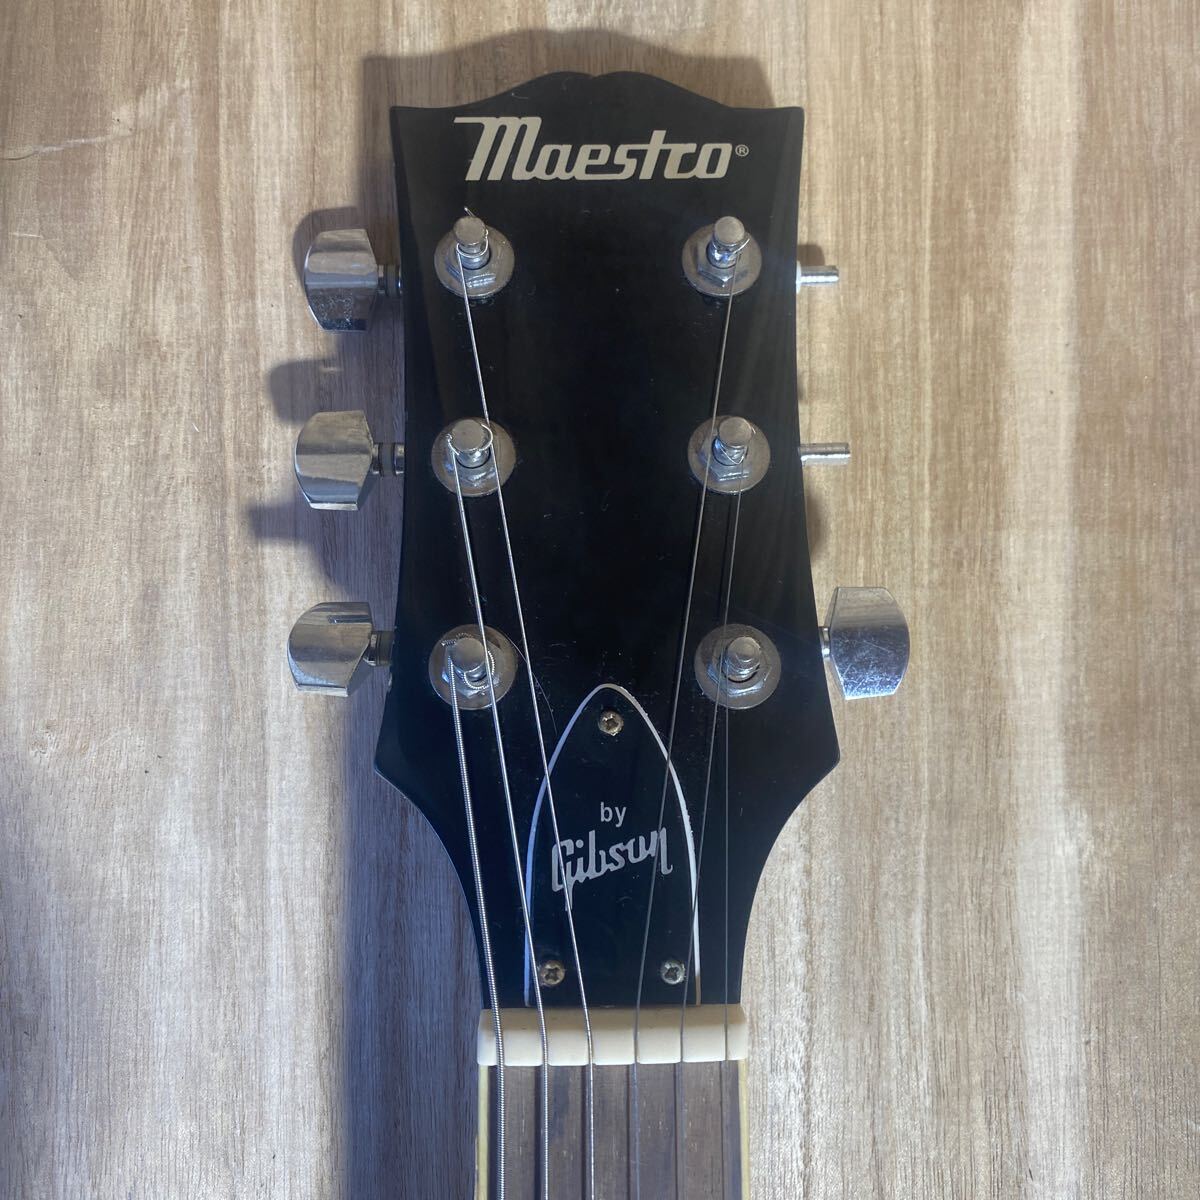 Maestro エレキギター by Gibson レスポール 音出し確認済 ソフトケース付き_画像4